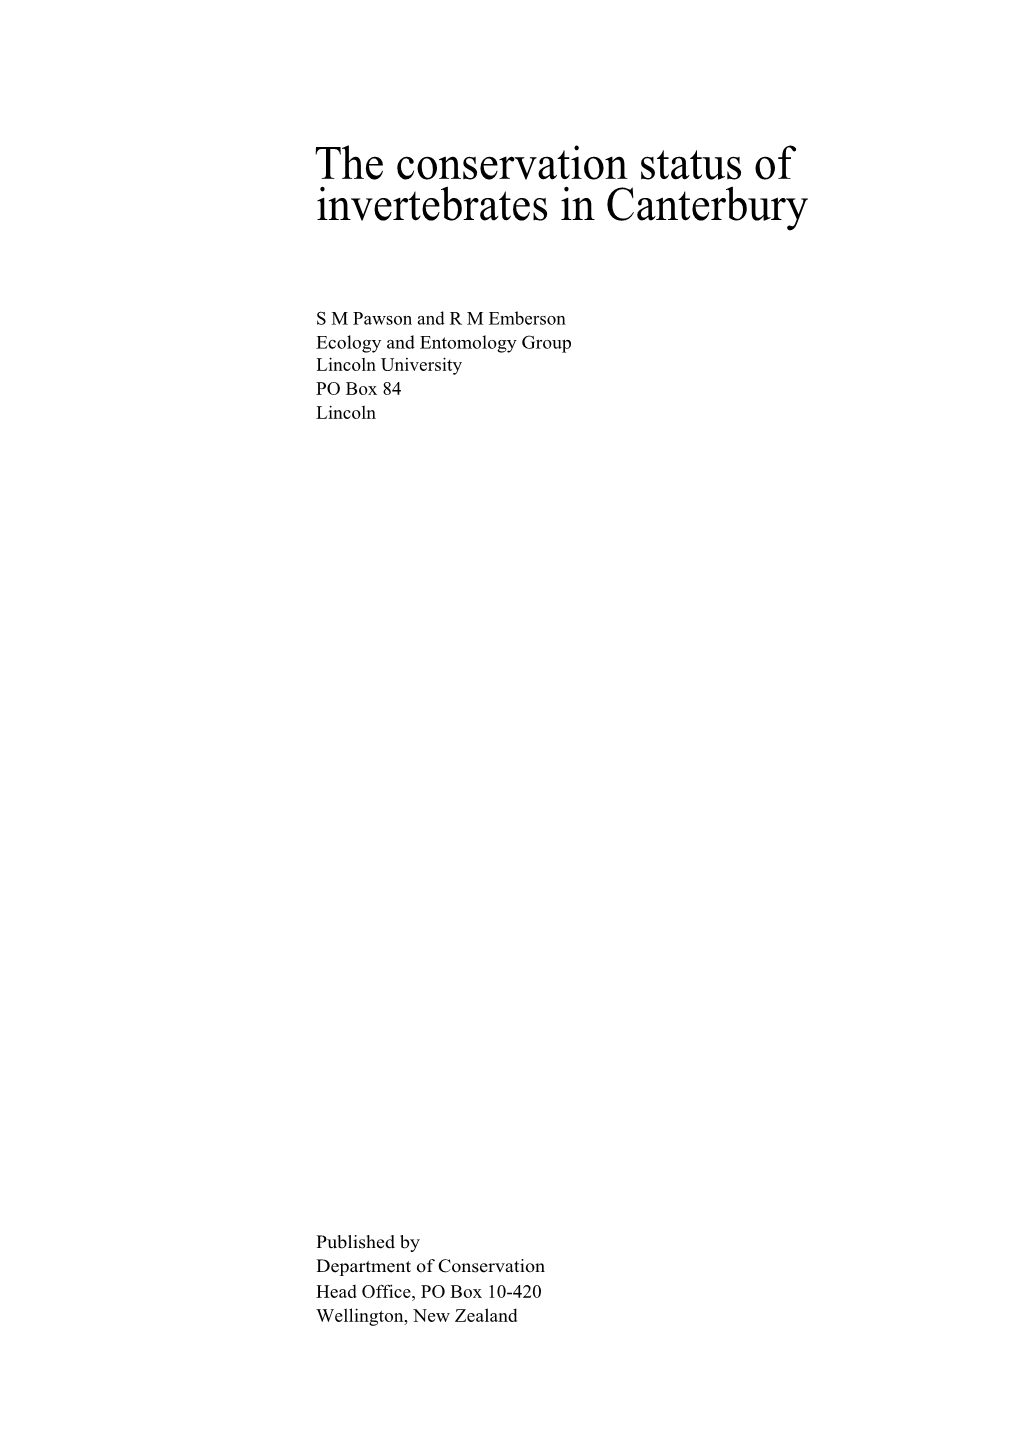 The Conservation Status of Invertebrates in Canterbury